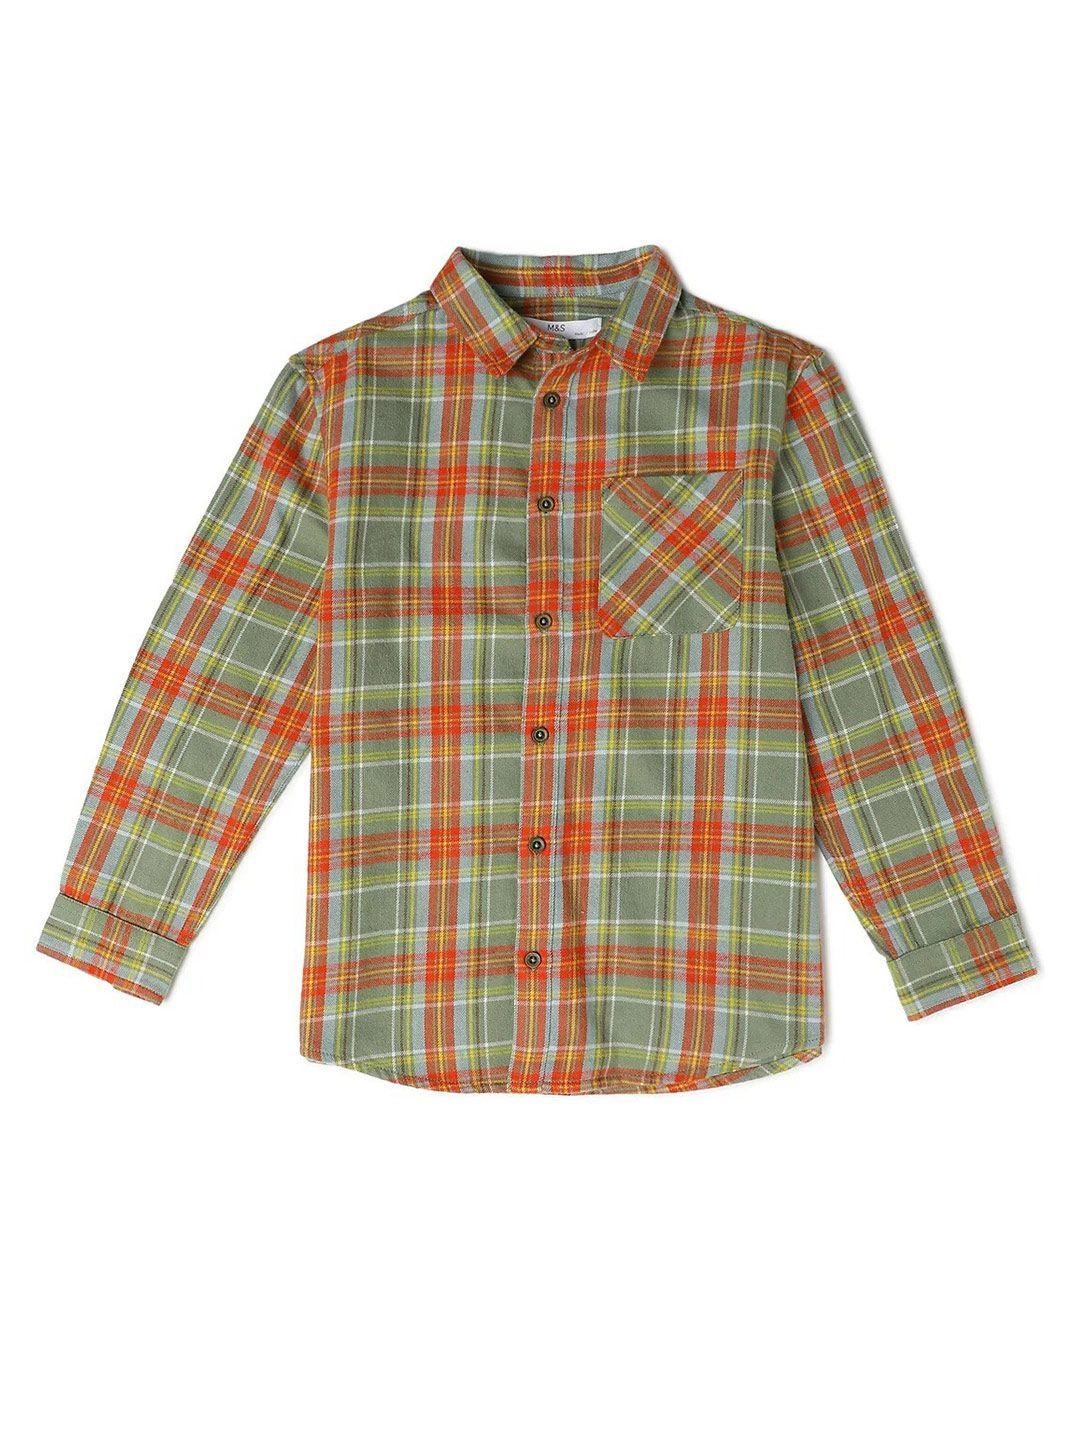 marks & spencer boys khaki & orange tartan checked pure cotton casual shirt